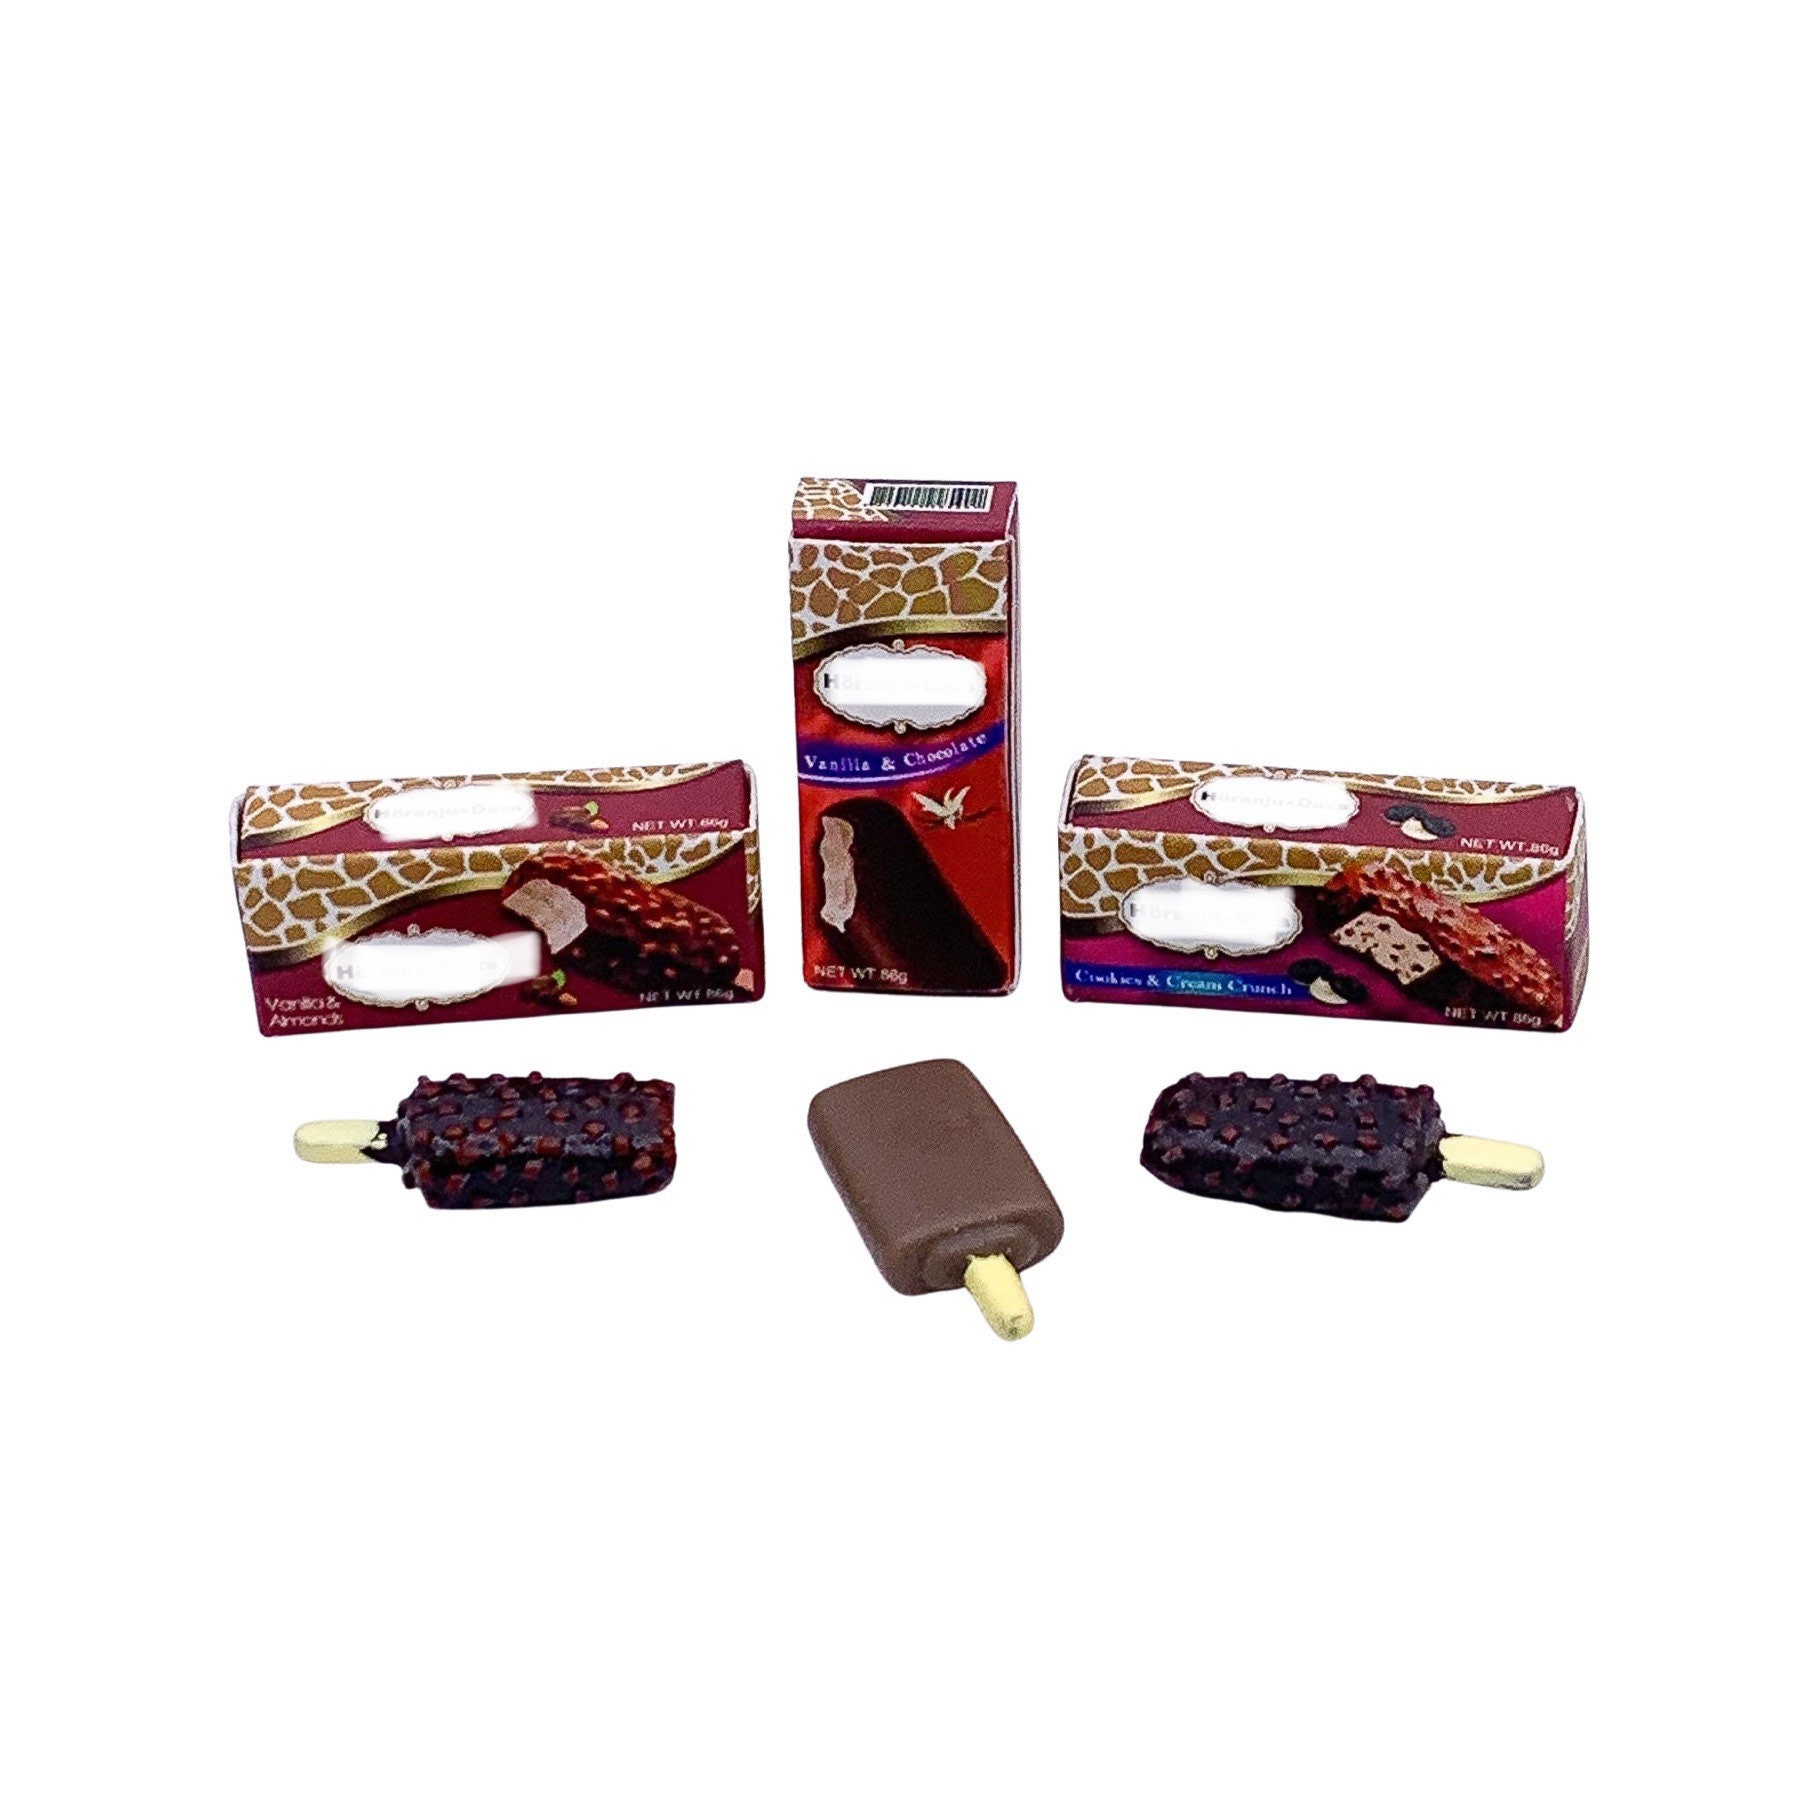 Decoden Phone Case DIY Kit Chocolate Strawberry Ice Cream Cookies